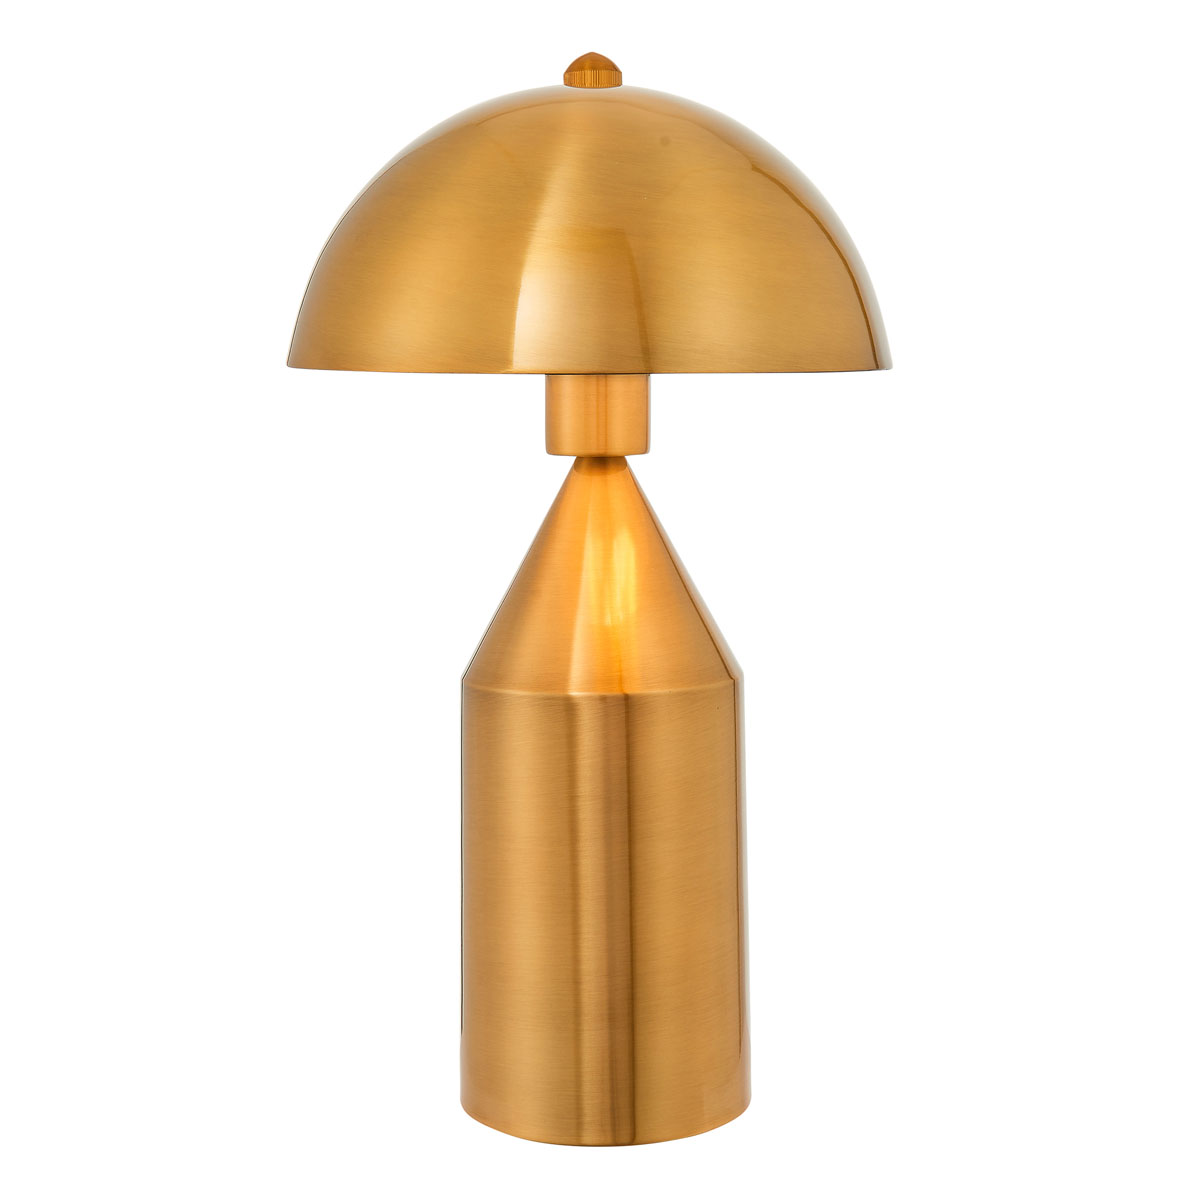 Nova 1 Table Light Antique Brass